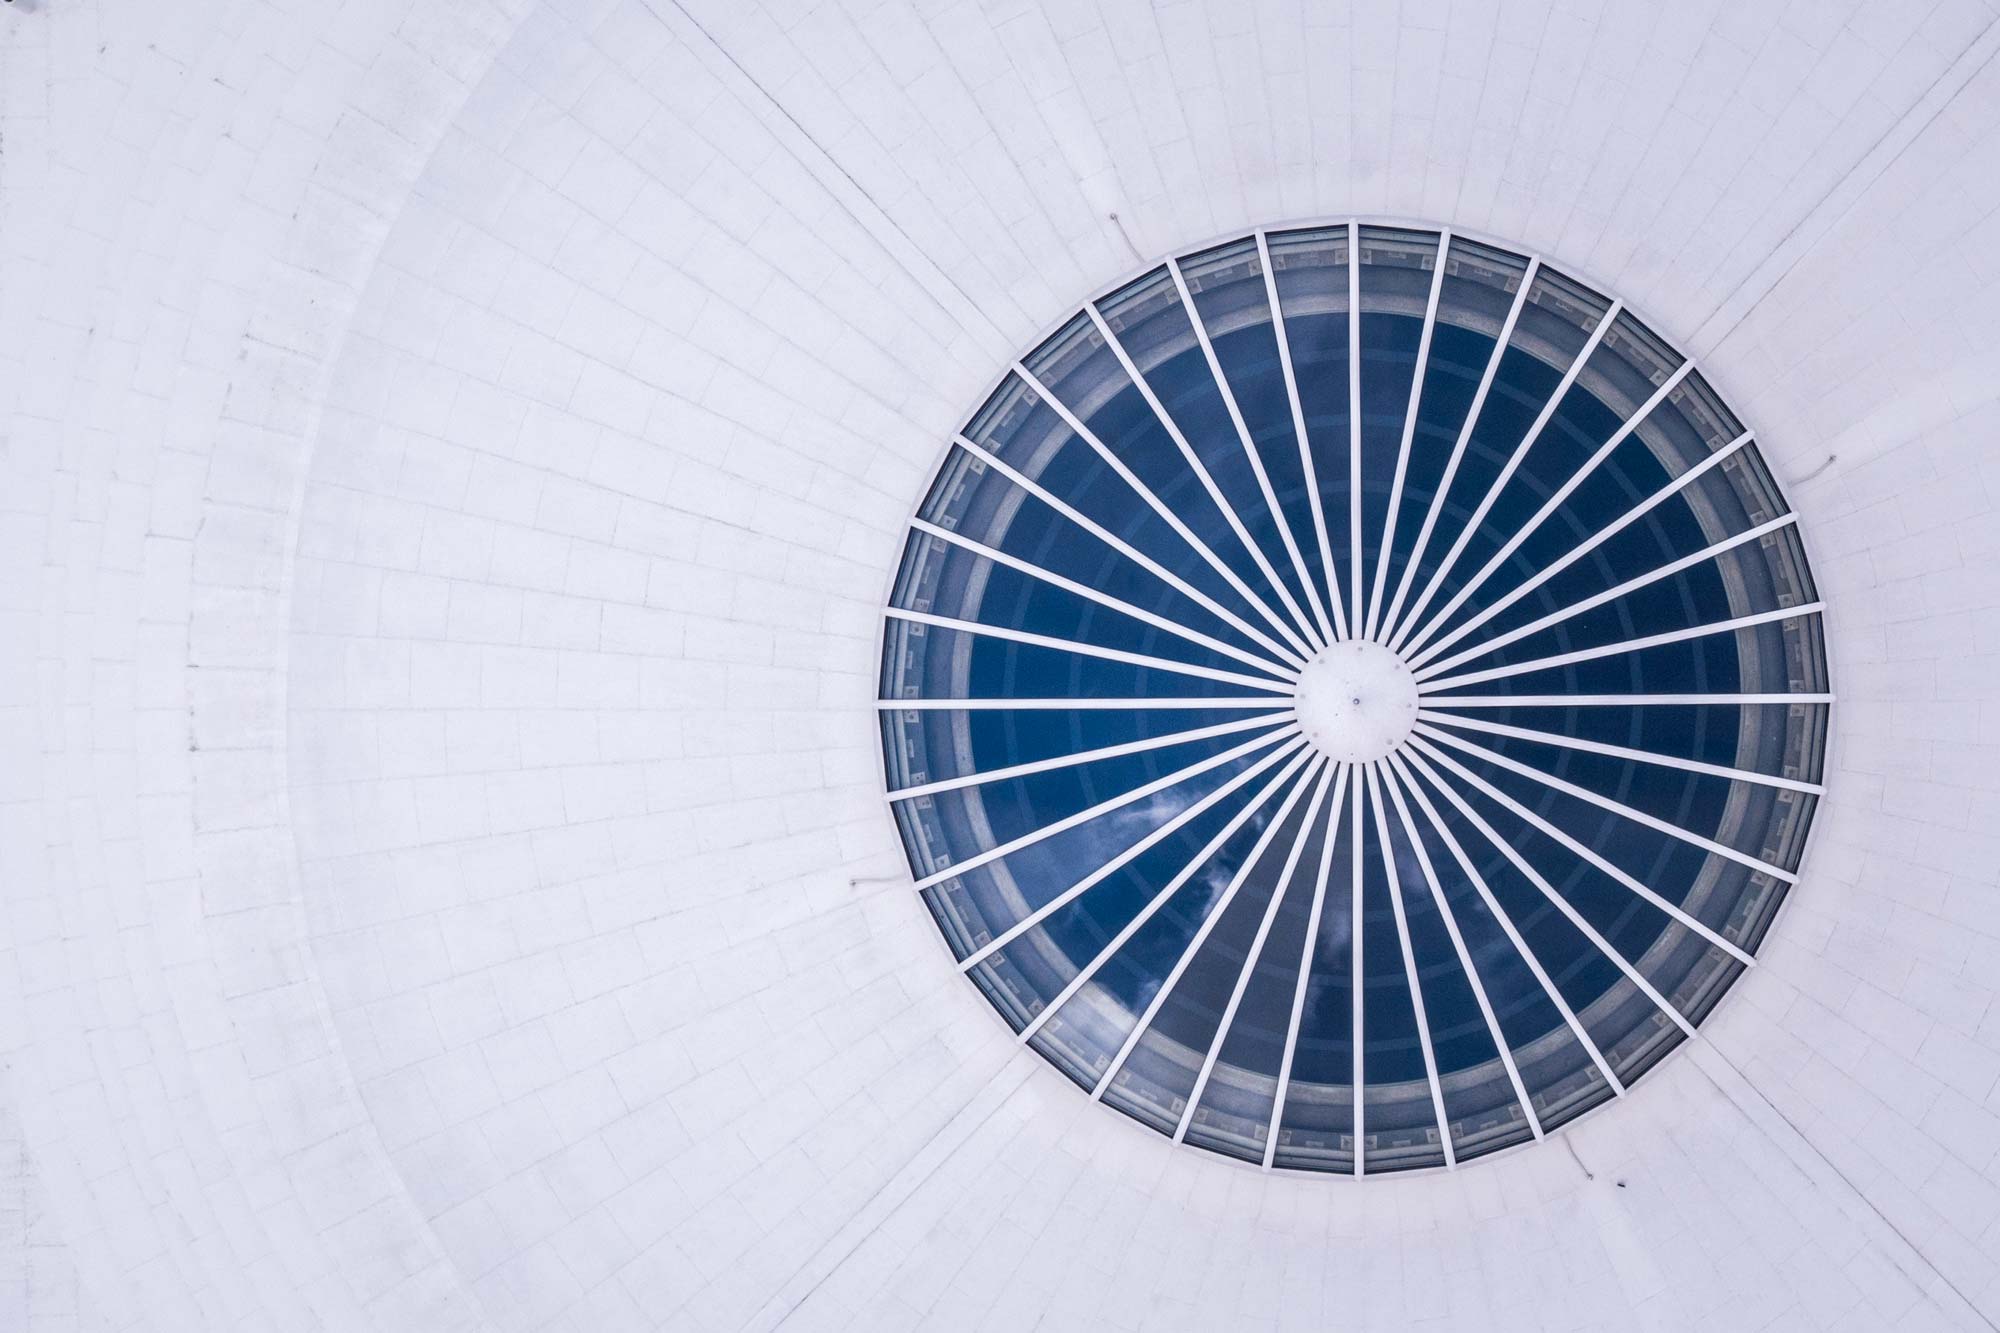 Aerial view of the UVA Rotunda's oculus